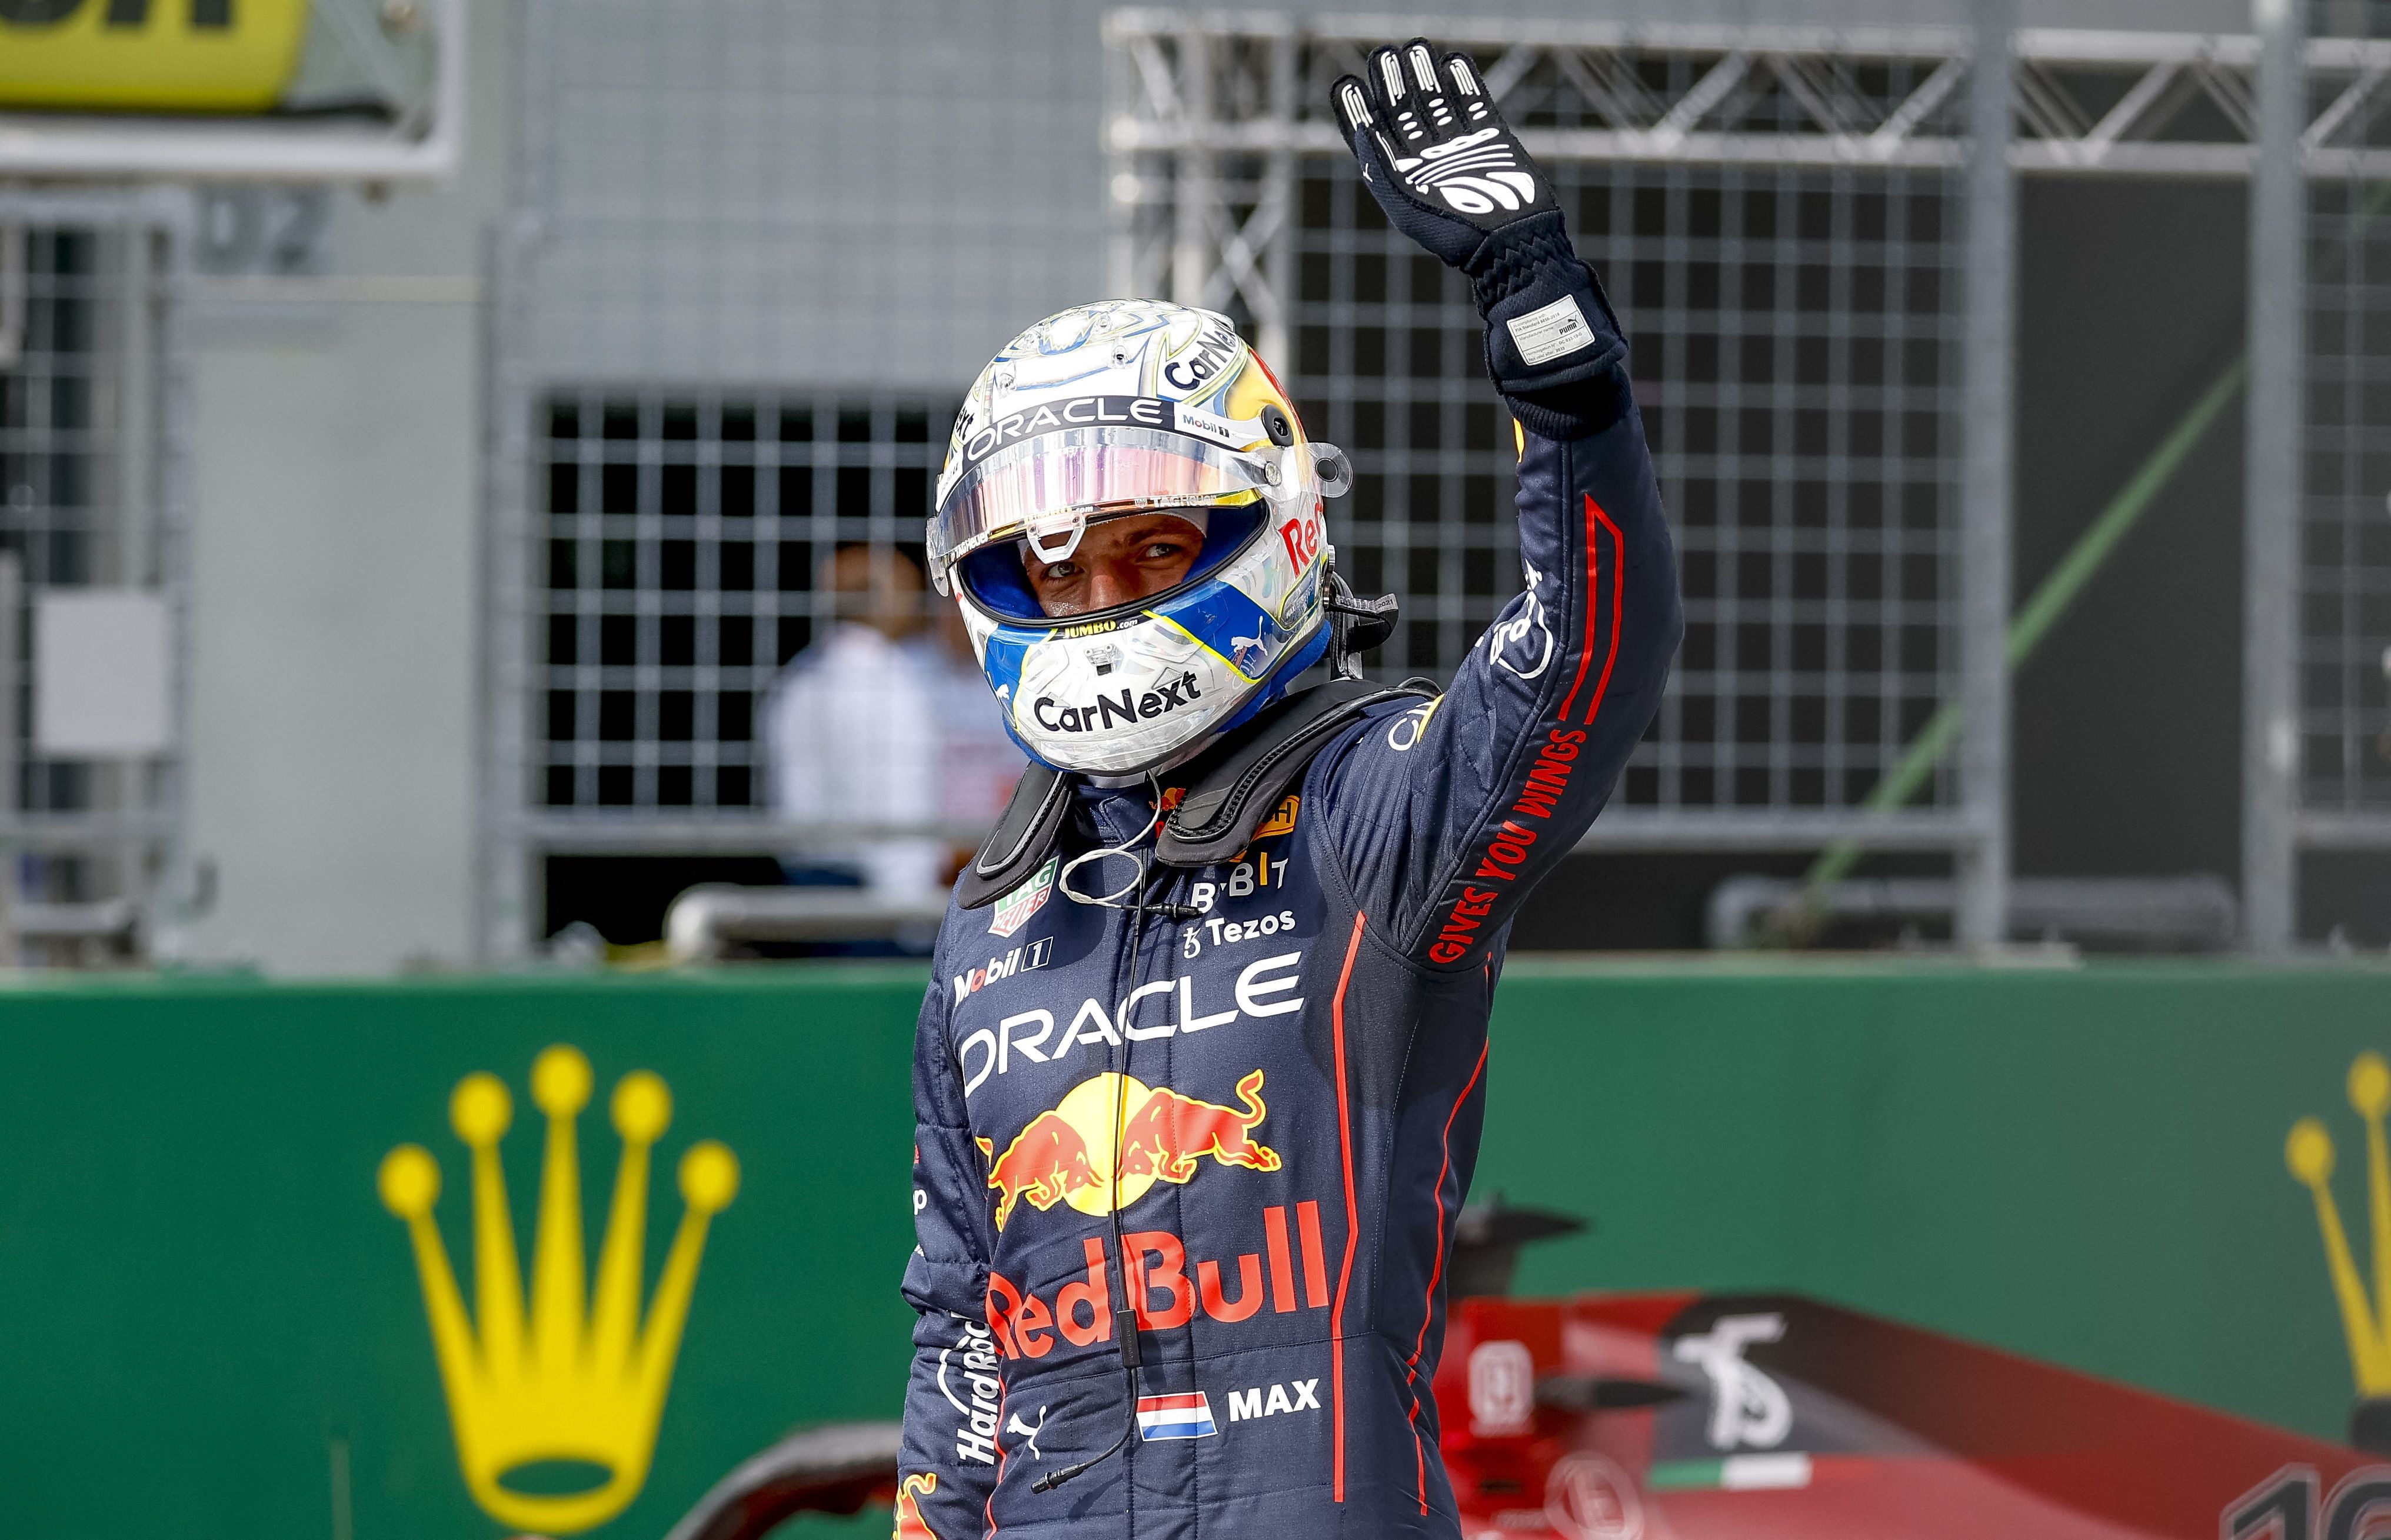 Max Verstappen waves after the sprint qualifying in Spielberg, Austria, on Saturday